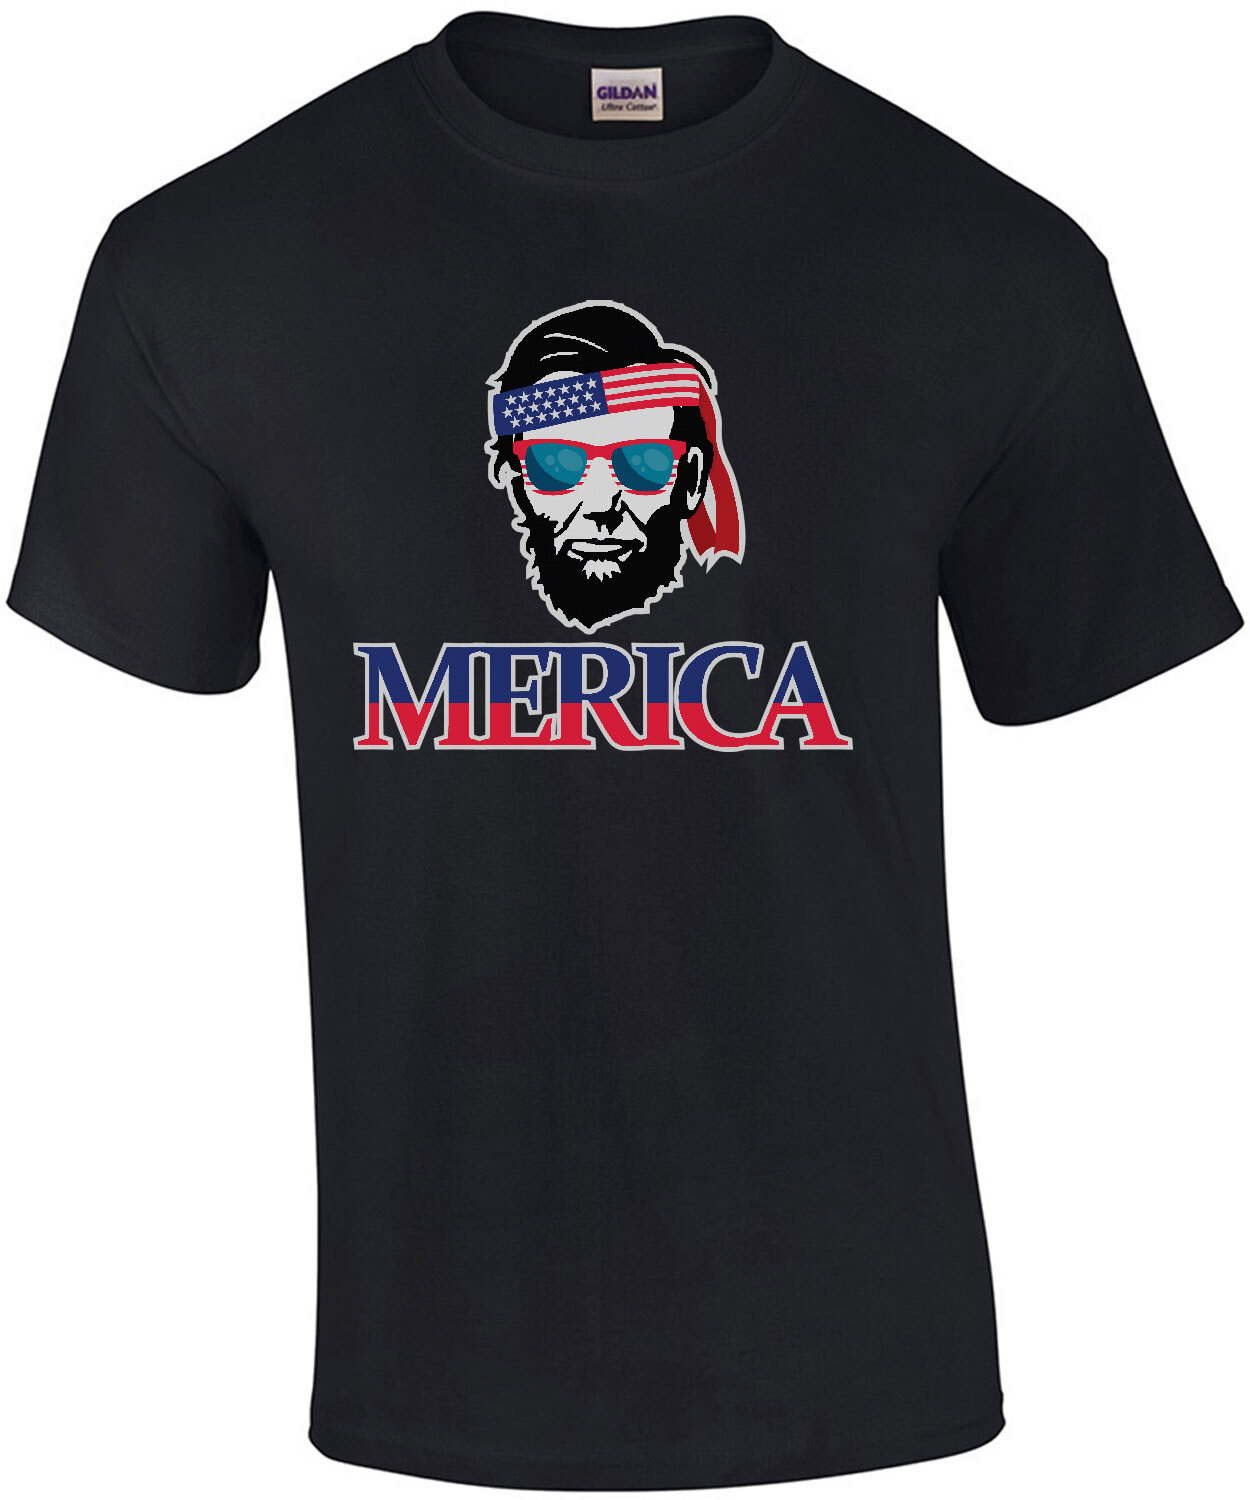 Merica - Abraham Lincoln - patriotic t-shirt